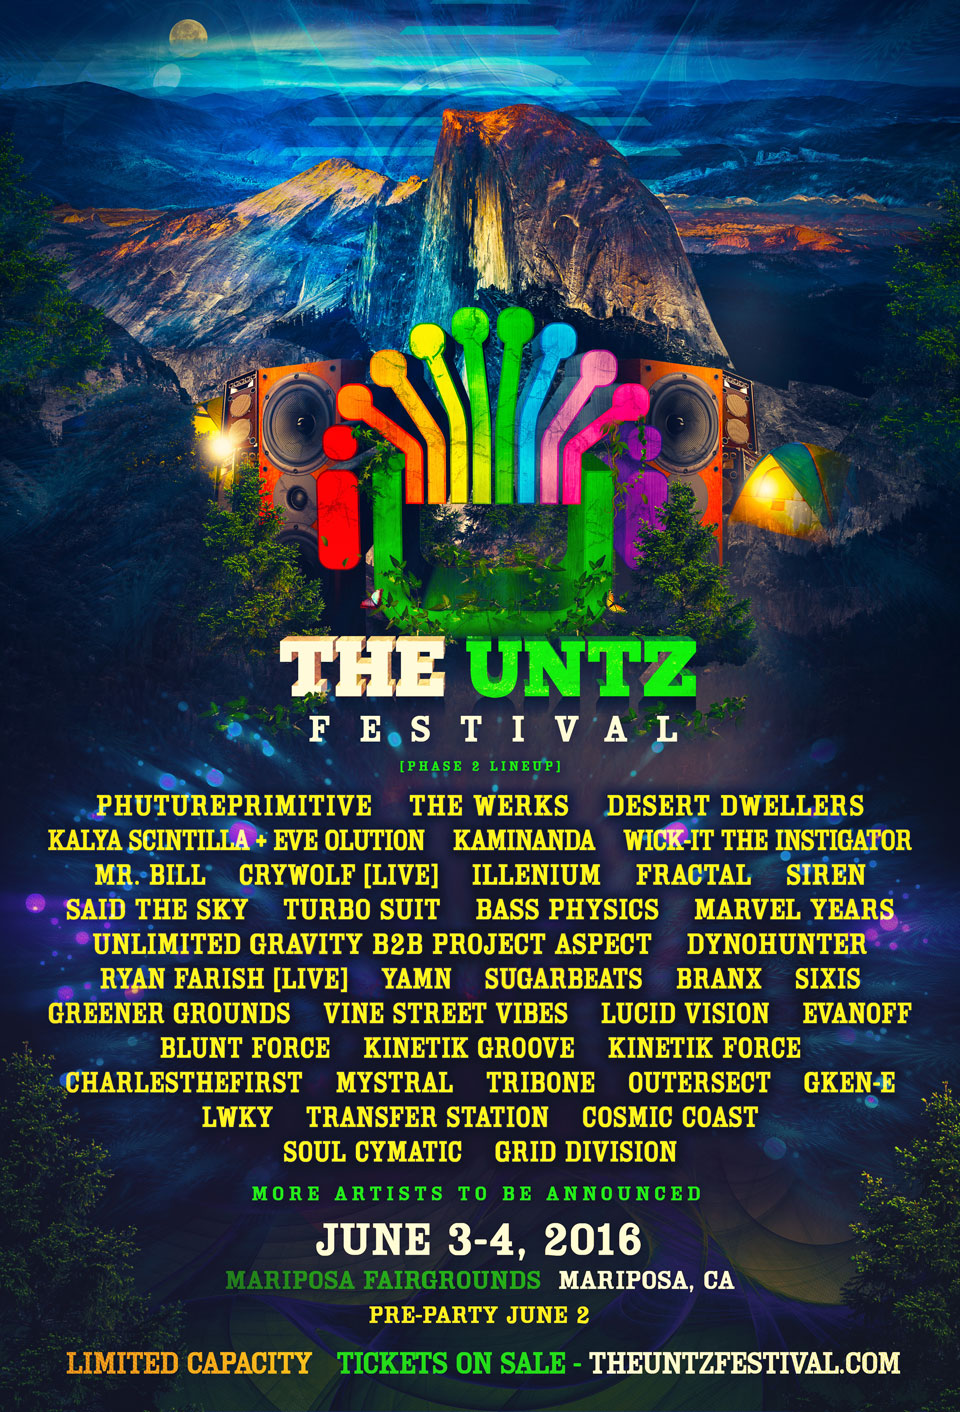 The Untz Festival - Phase 2